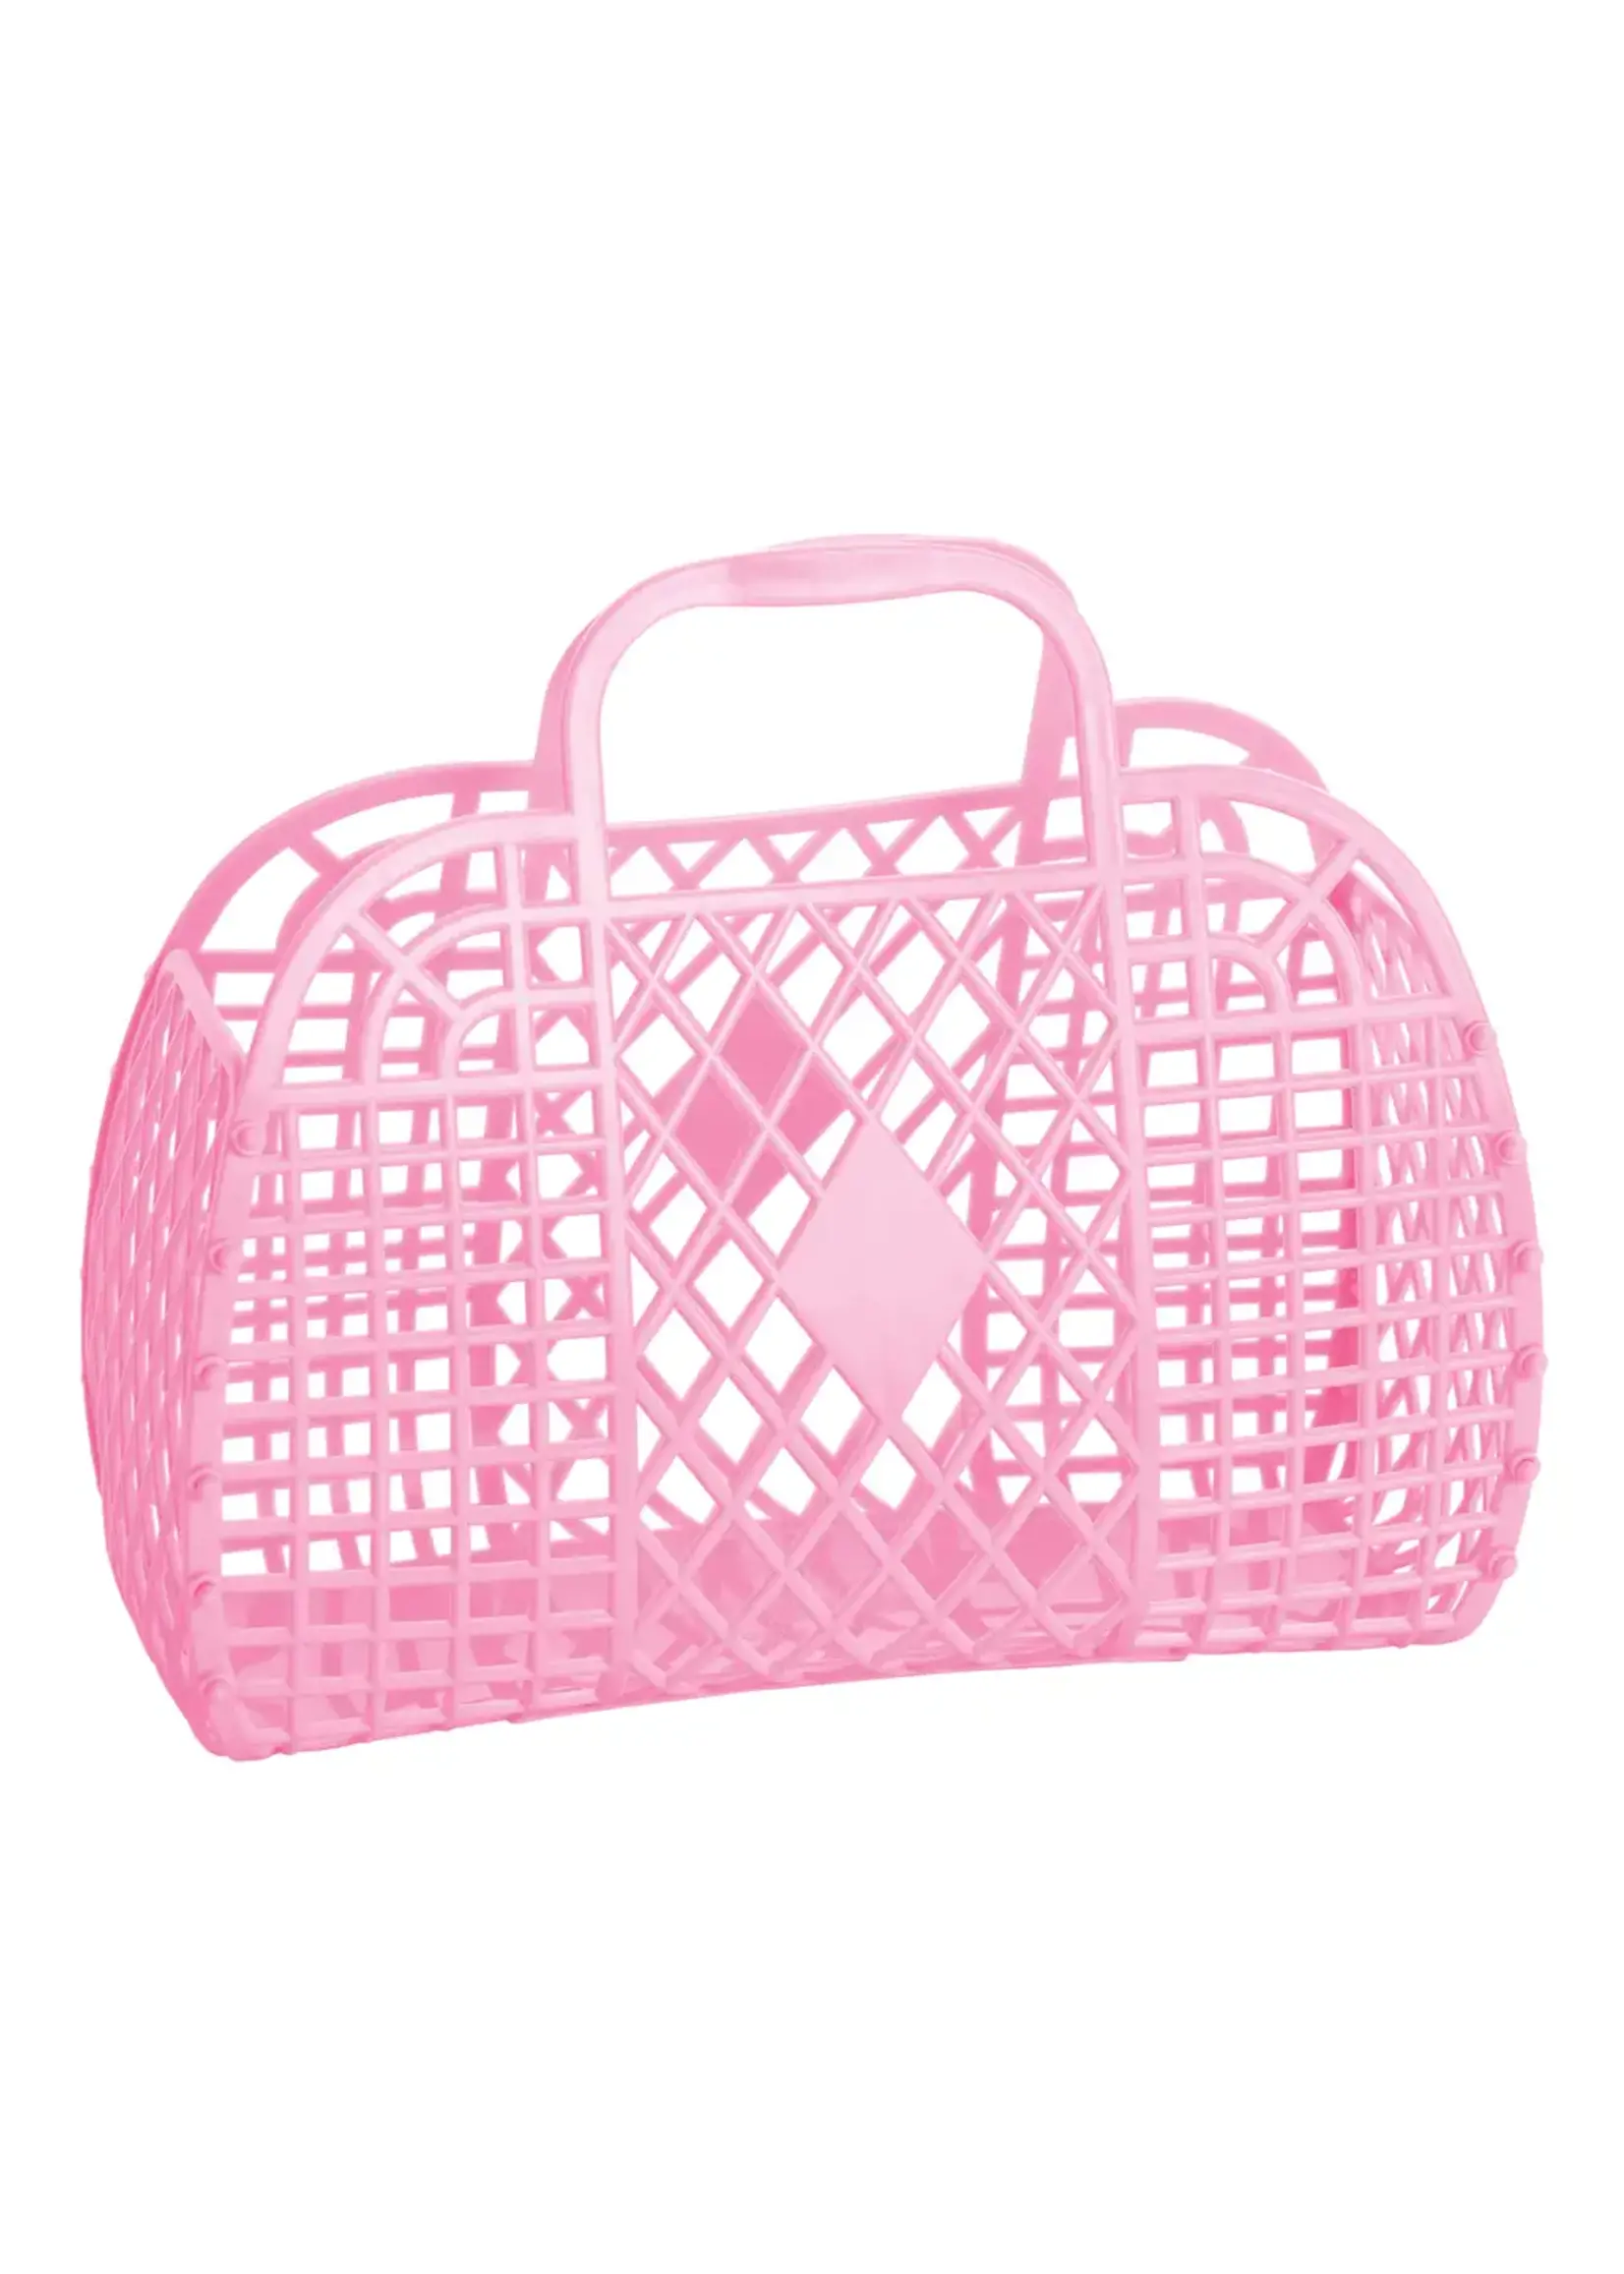 Sun Jellies Sun Jellies Retro Basket in Small Bubblegum Pink